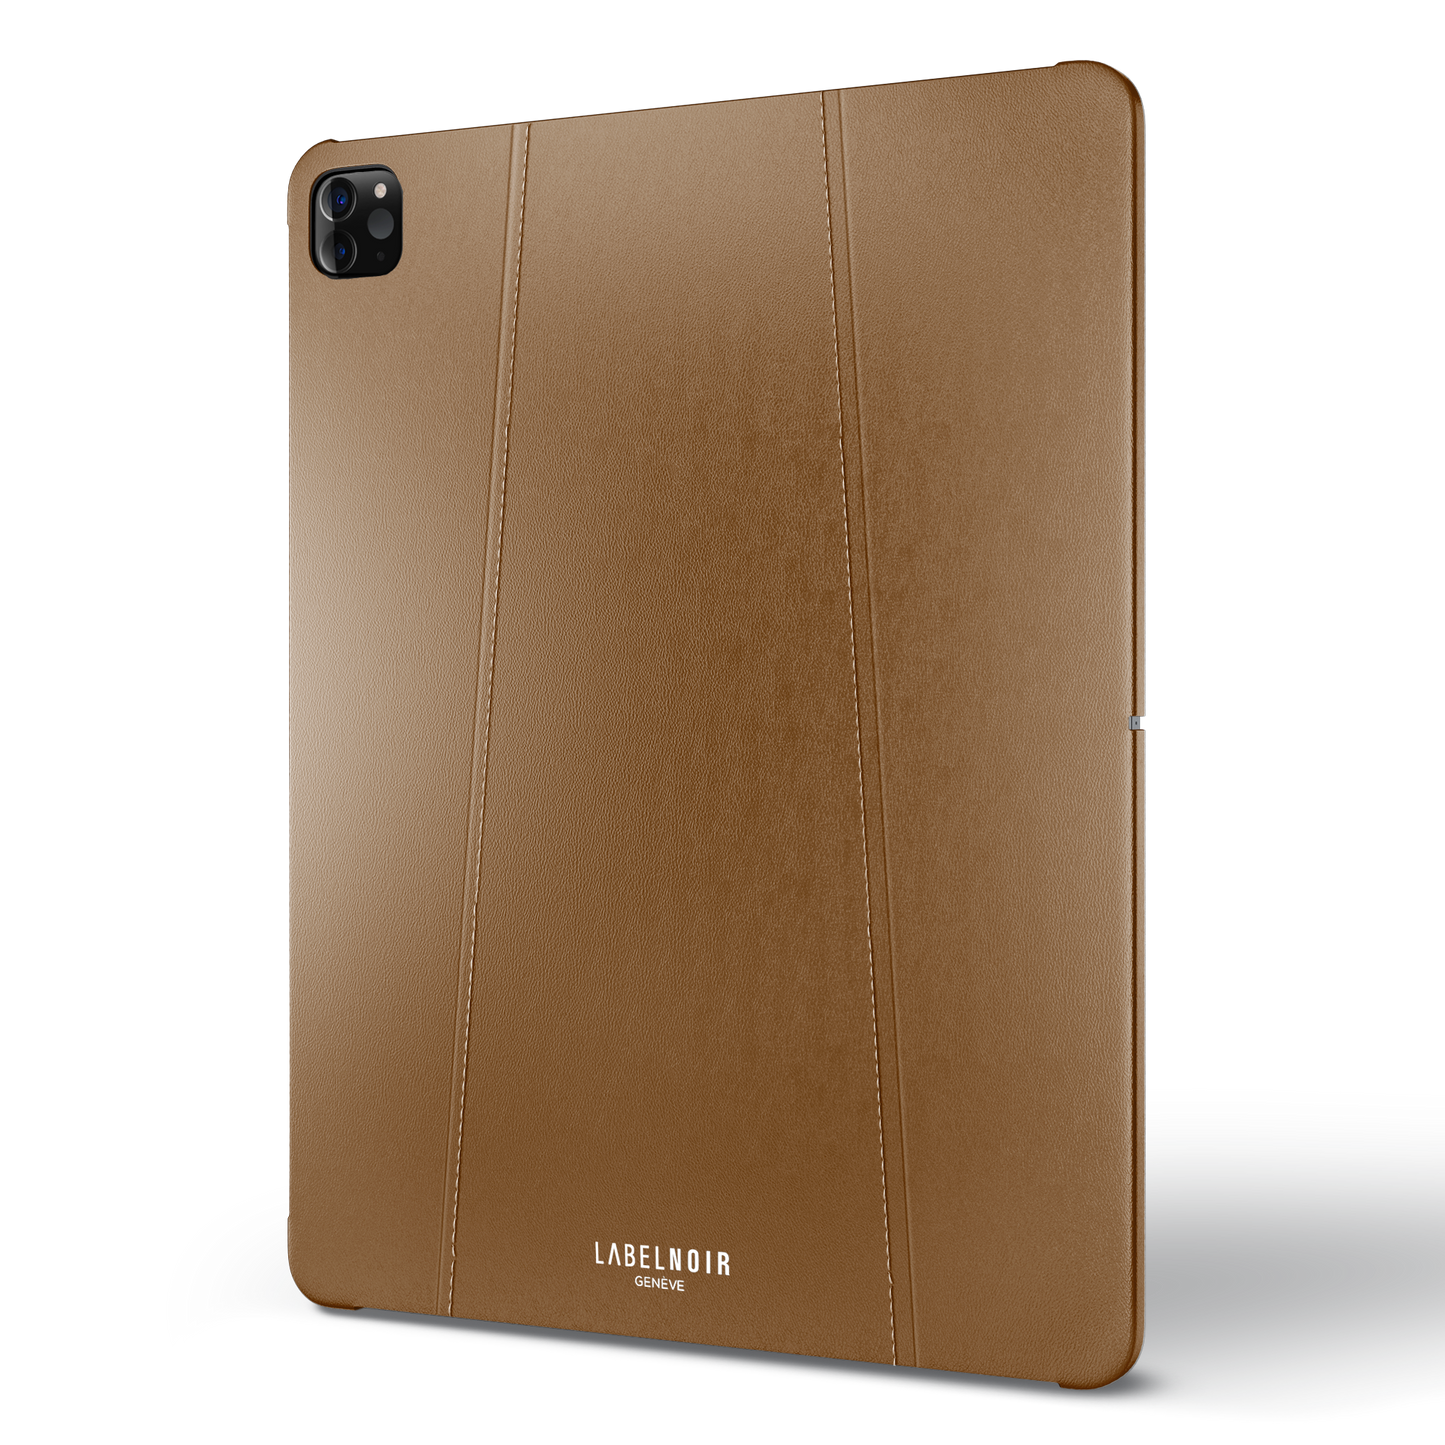 Ipad Pro (6th Gen) 12.9-inch Leather Case